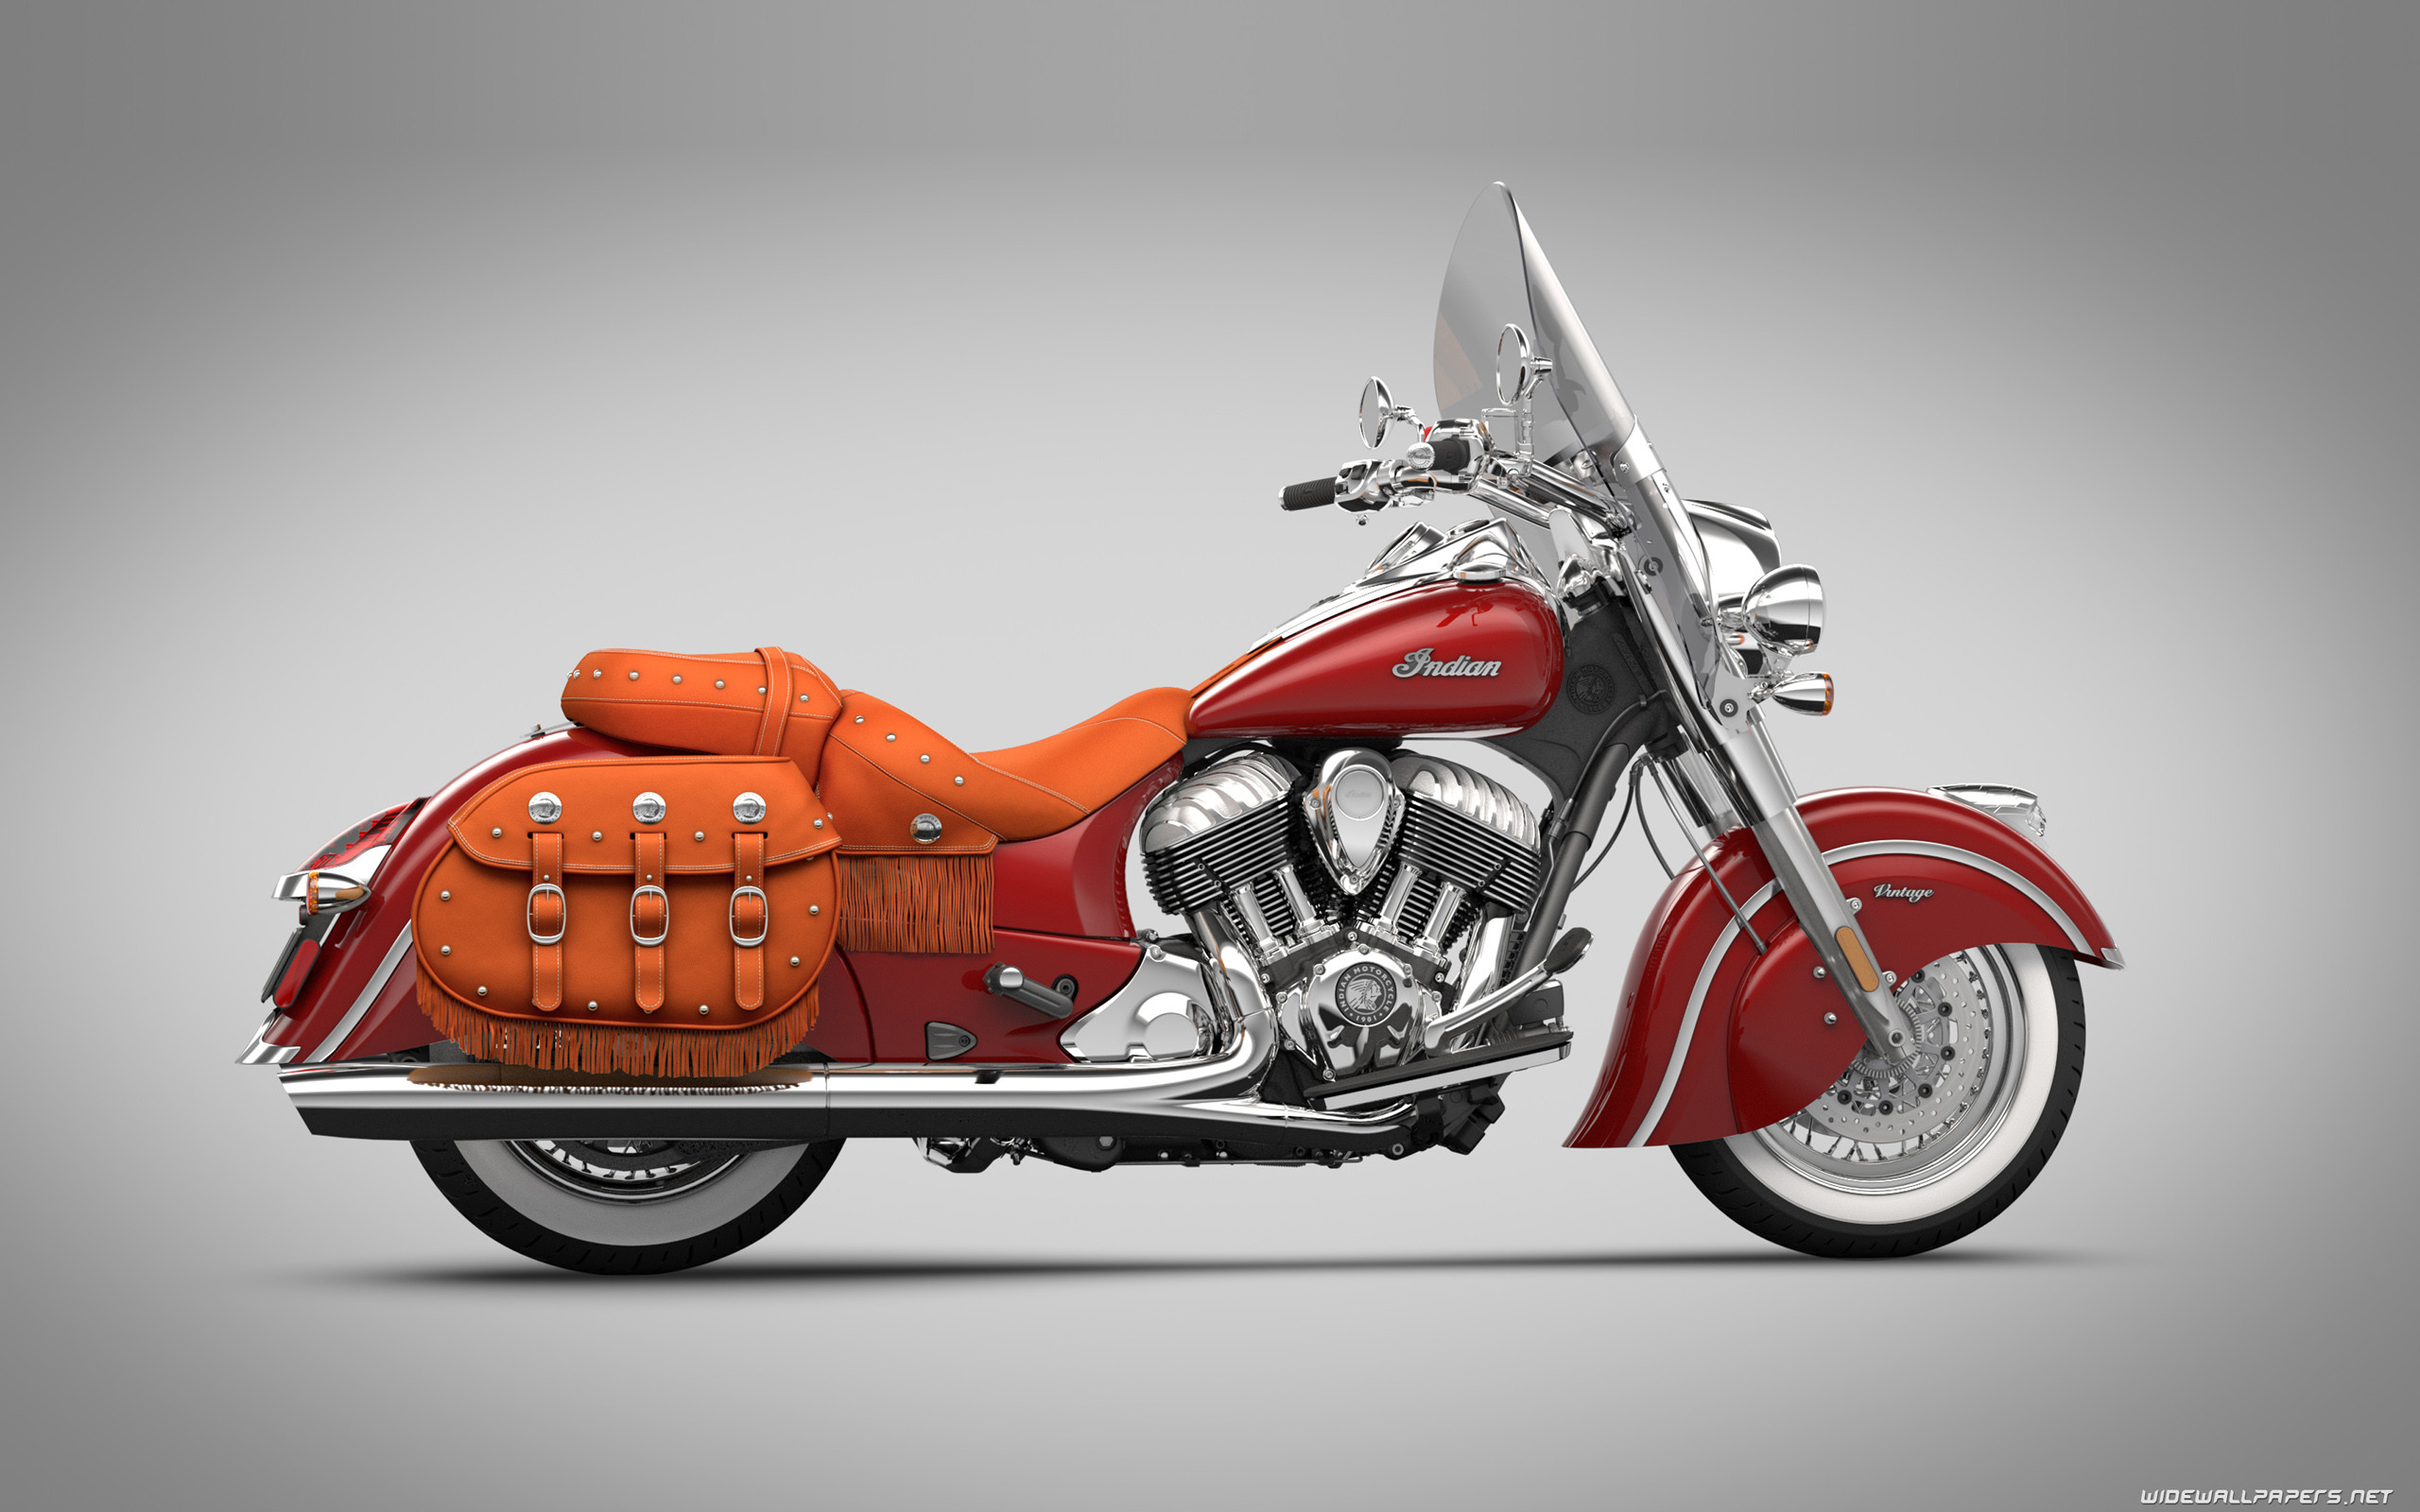 2560x1600 Indian Chief Vintage motorcycle desktop wallpapers 4K Ultra HDVintage Indian  Motorcycles Wallpapers